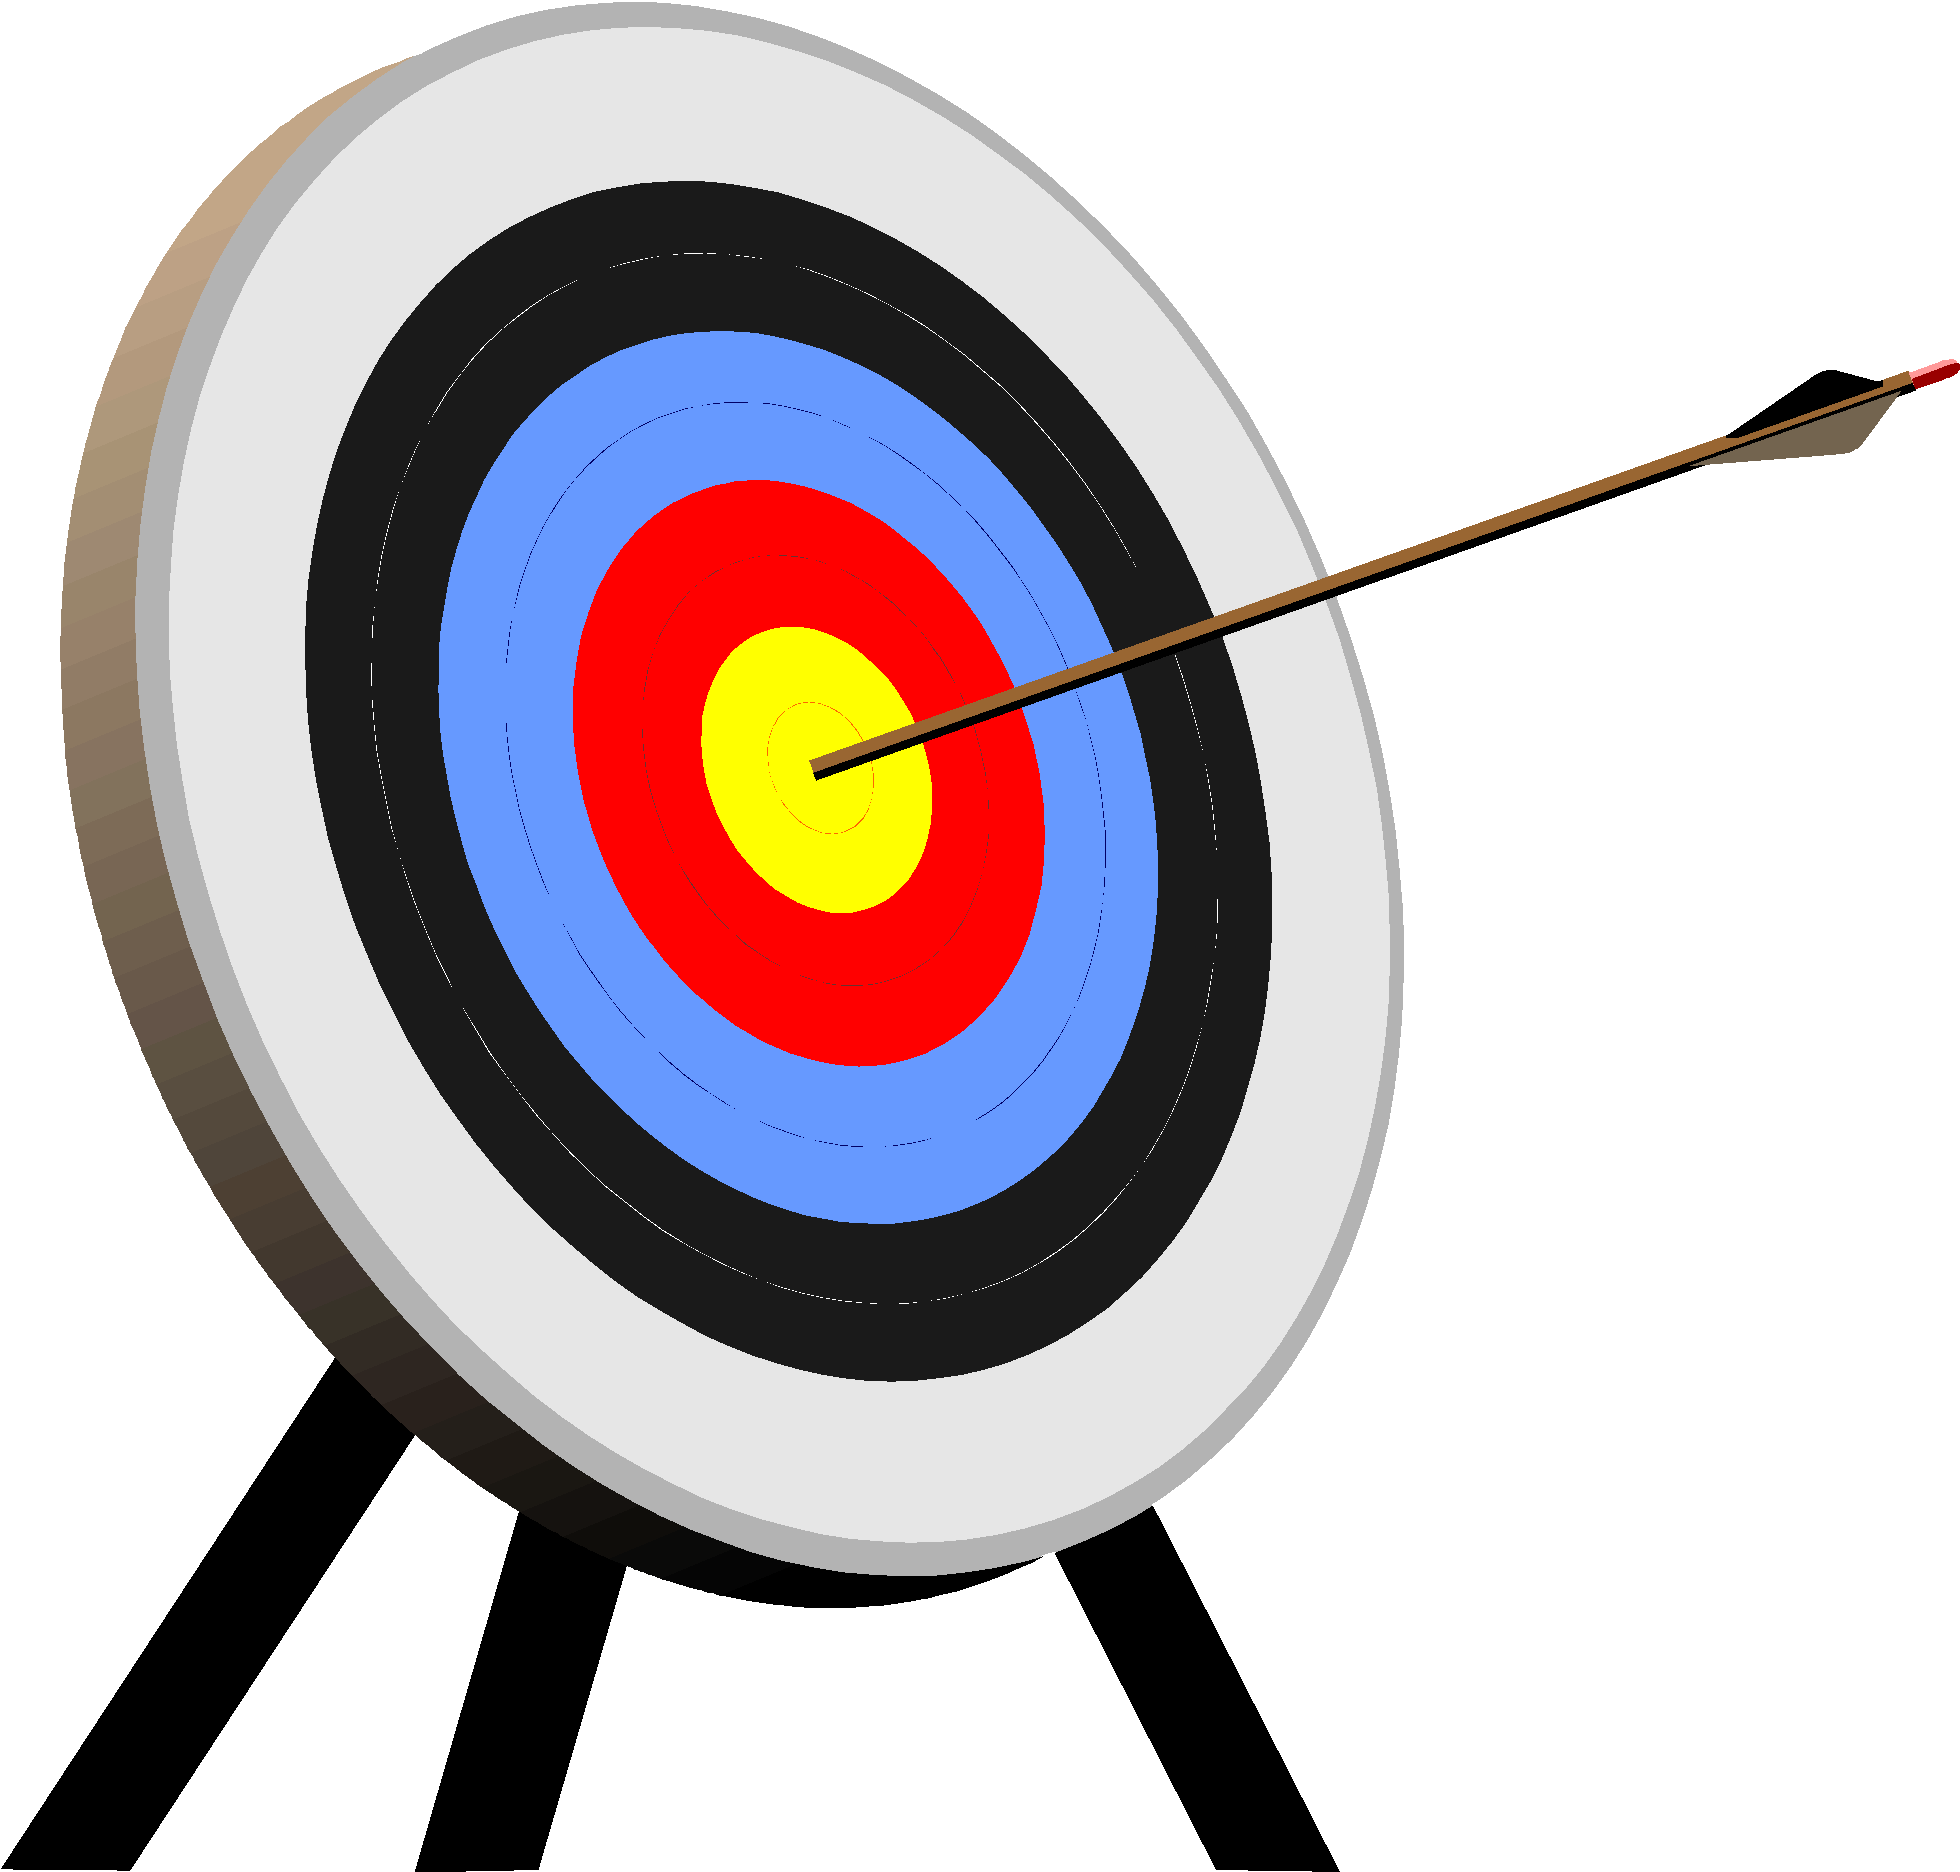 Archery clipart free - ClipartFox